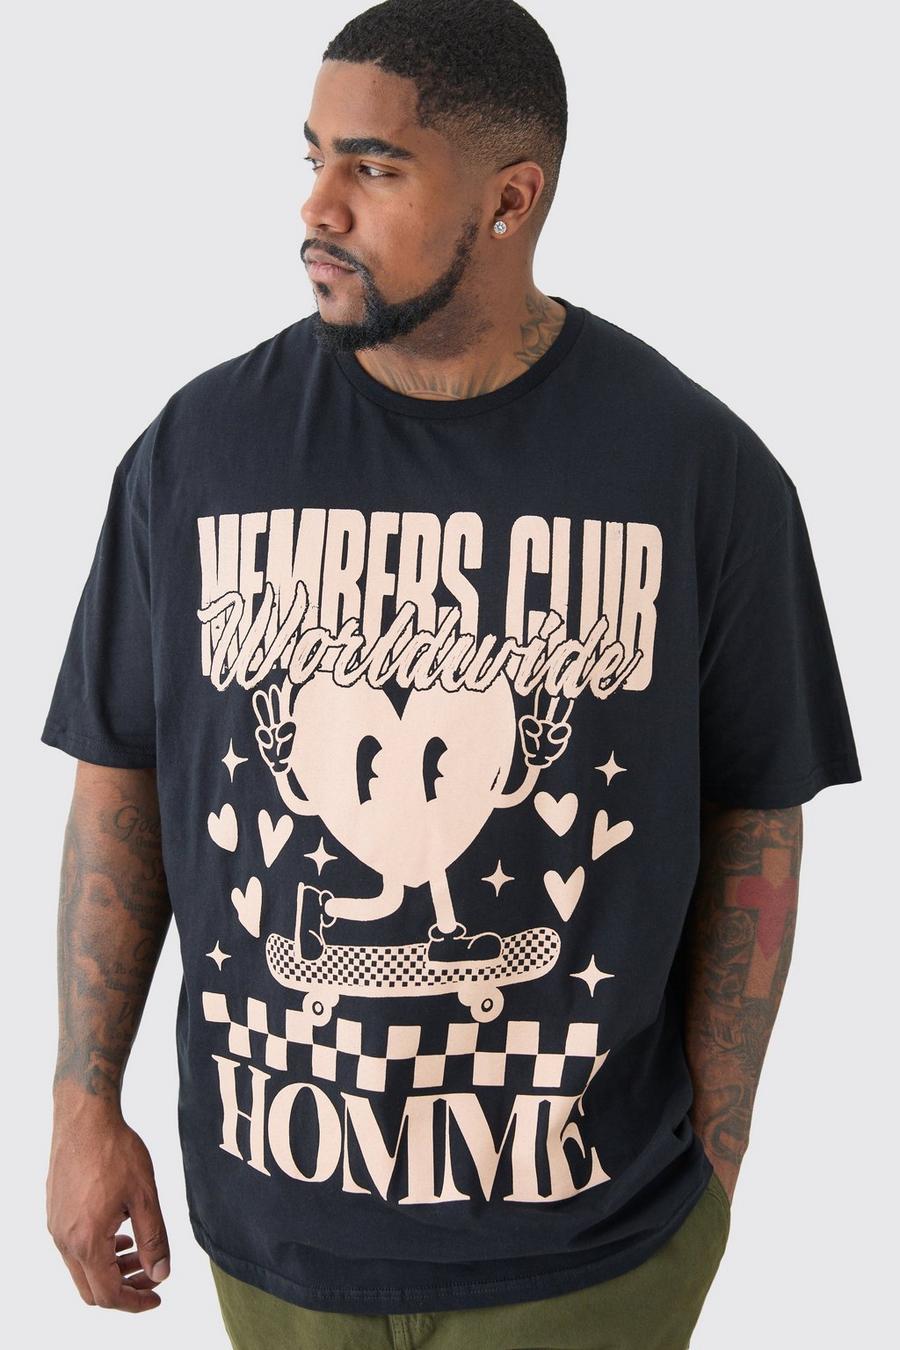 Plus Members Club Worldwide T-shirt In Black